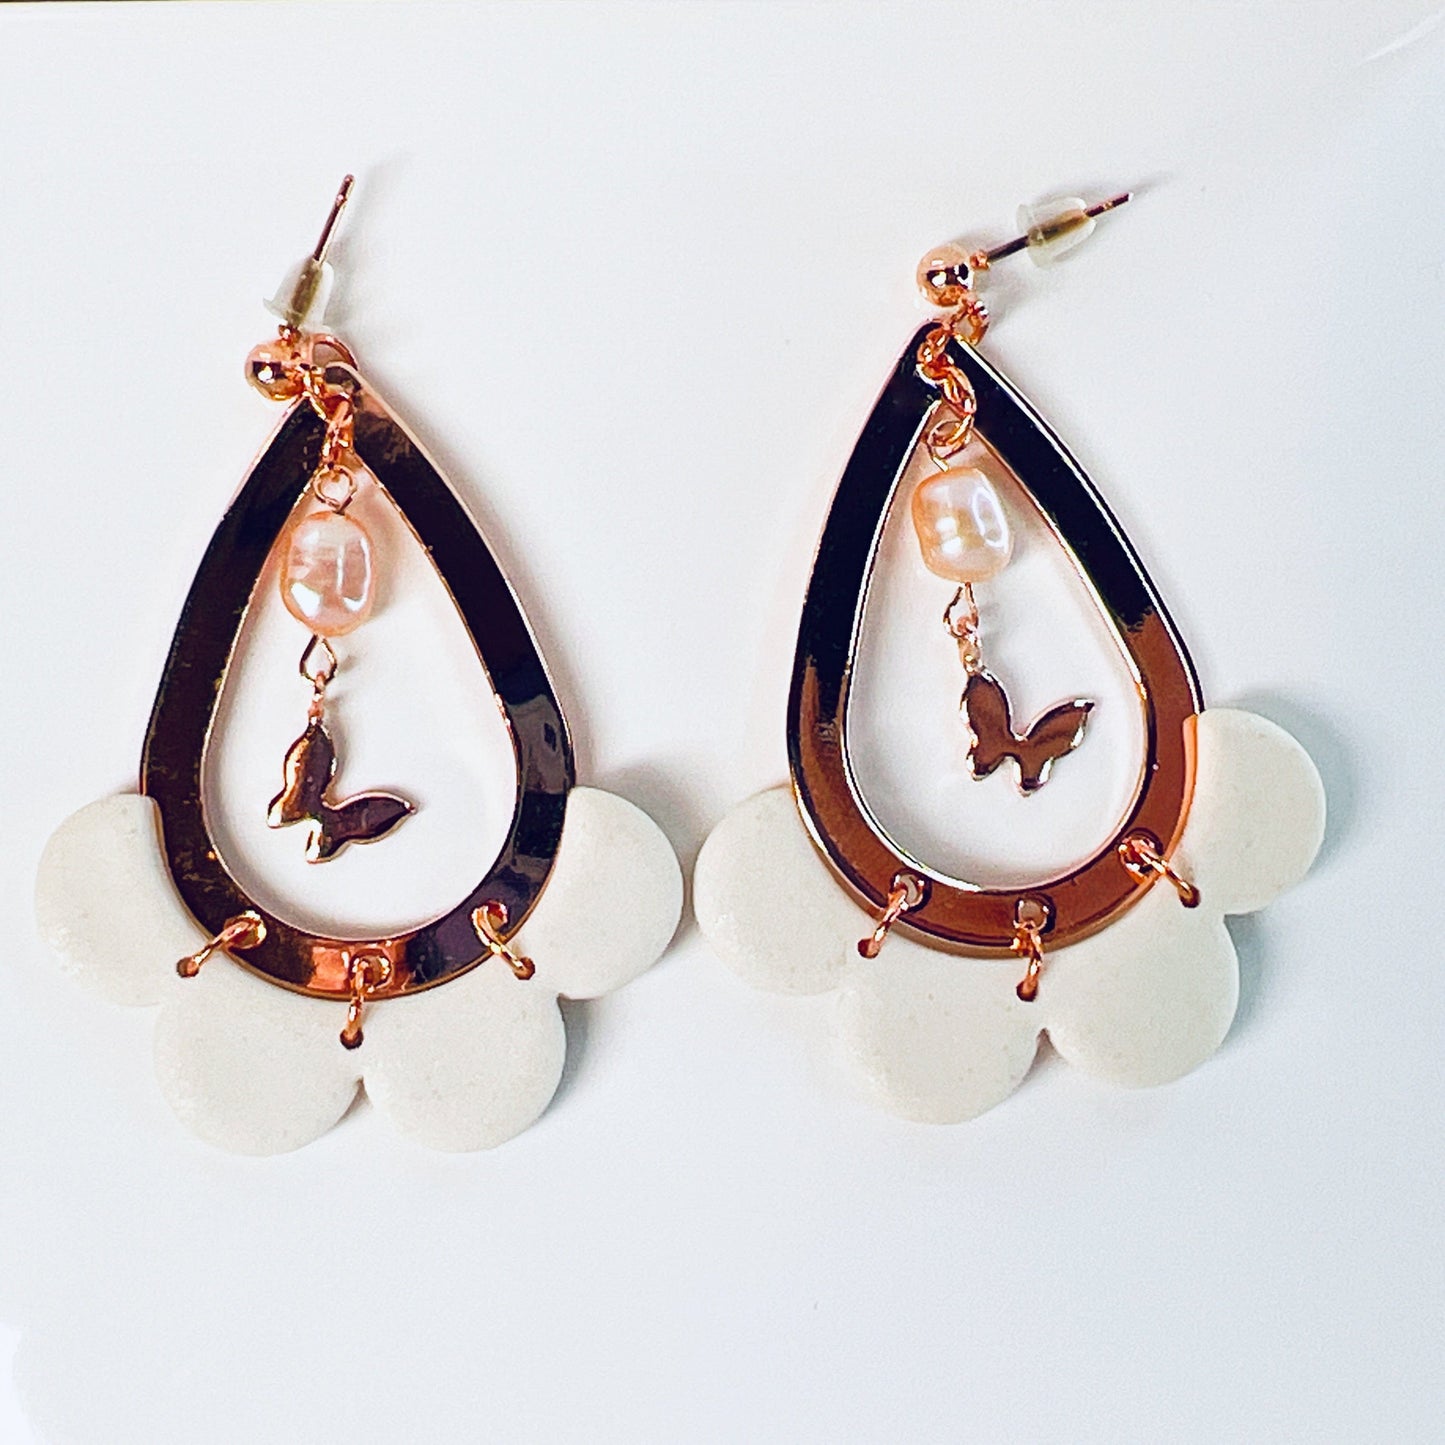 Earrings Dua - Floral Rose Gold Teardrop Earrings with Pearls & Butterflies